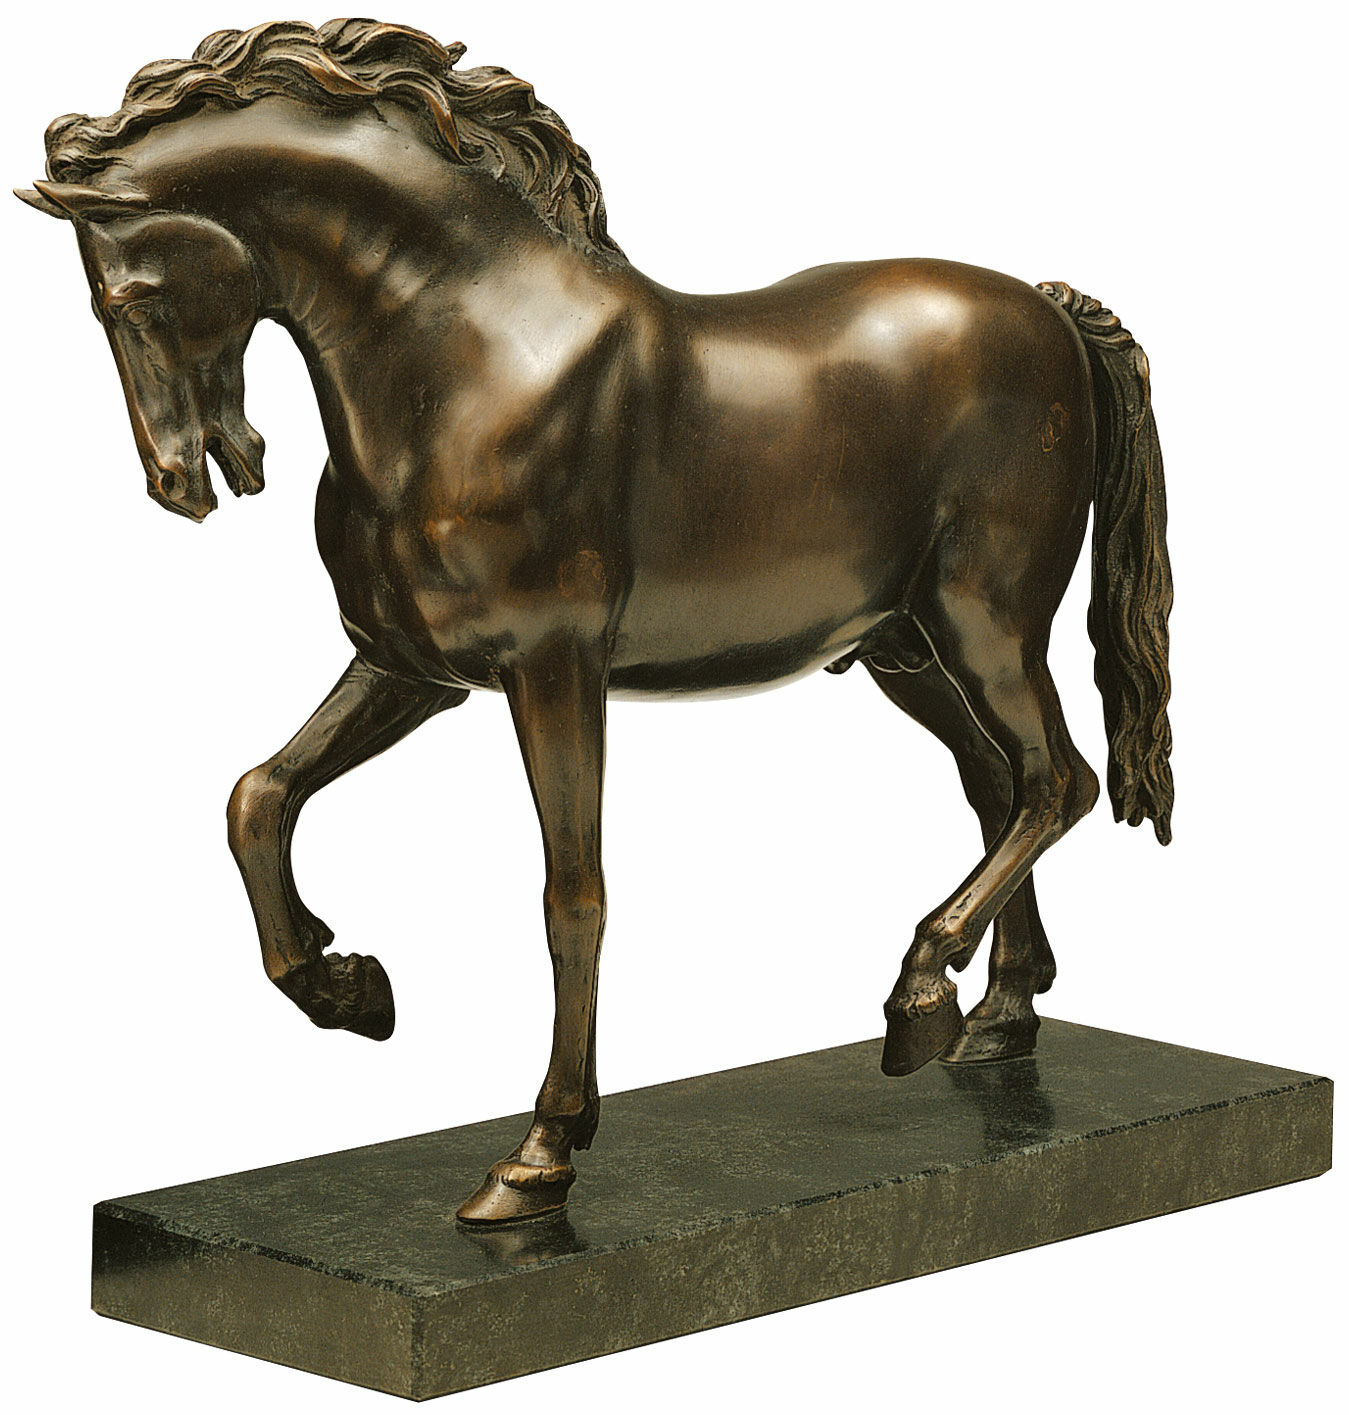 Sculpture "Le cheval des Médicis" (1594), version en bronze collé von Giovanni da Bologna